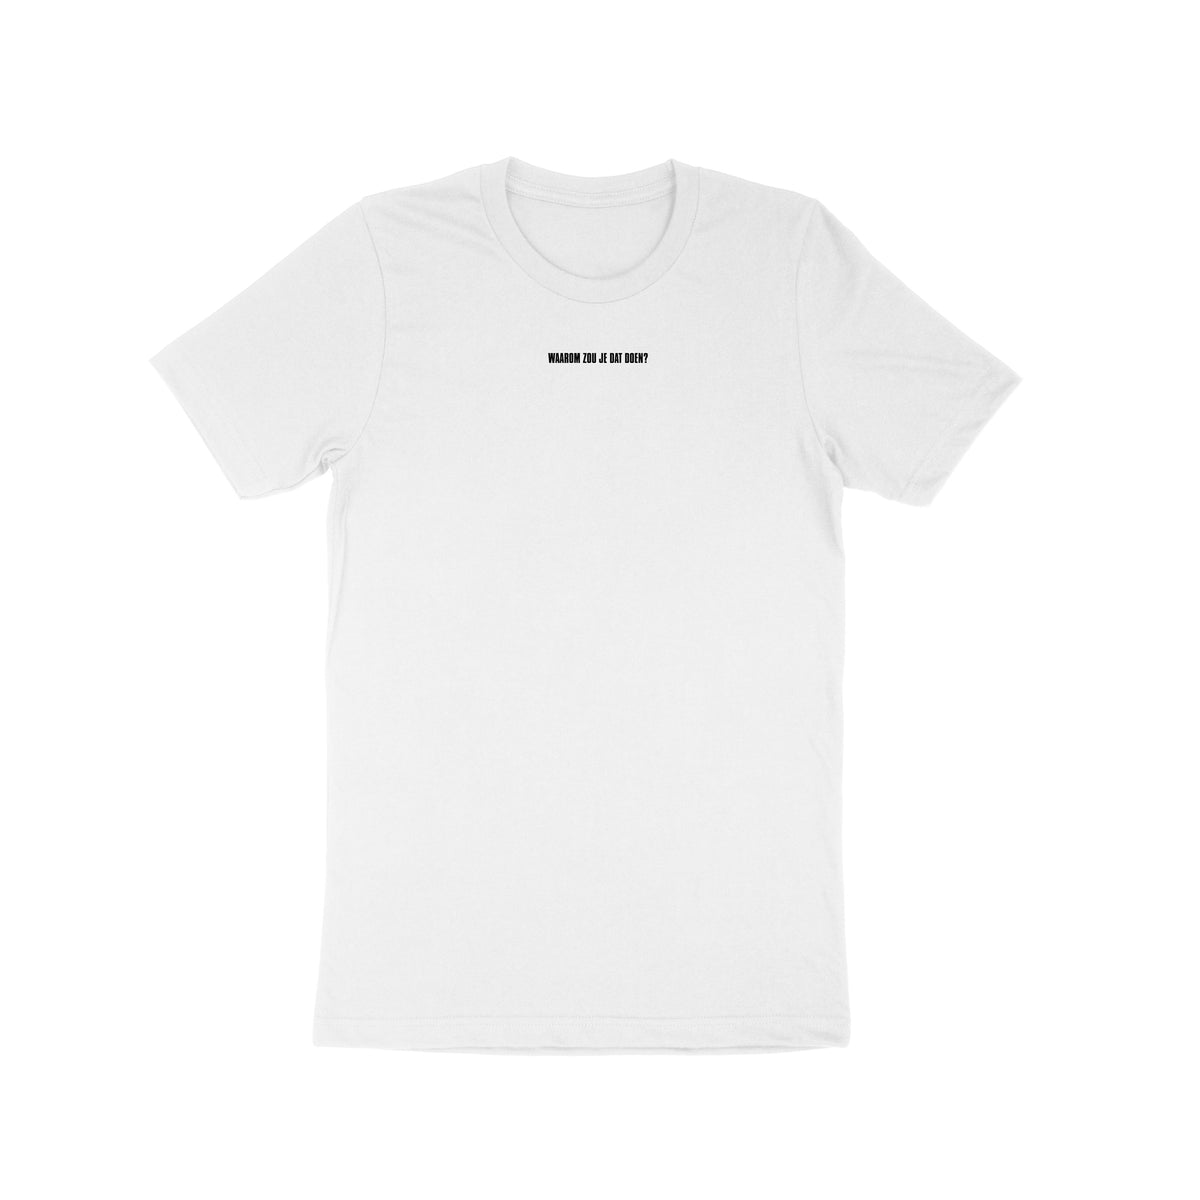 Nielson "Waarom zou je dat doen" t-shirt in white